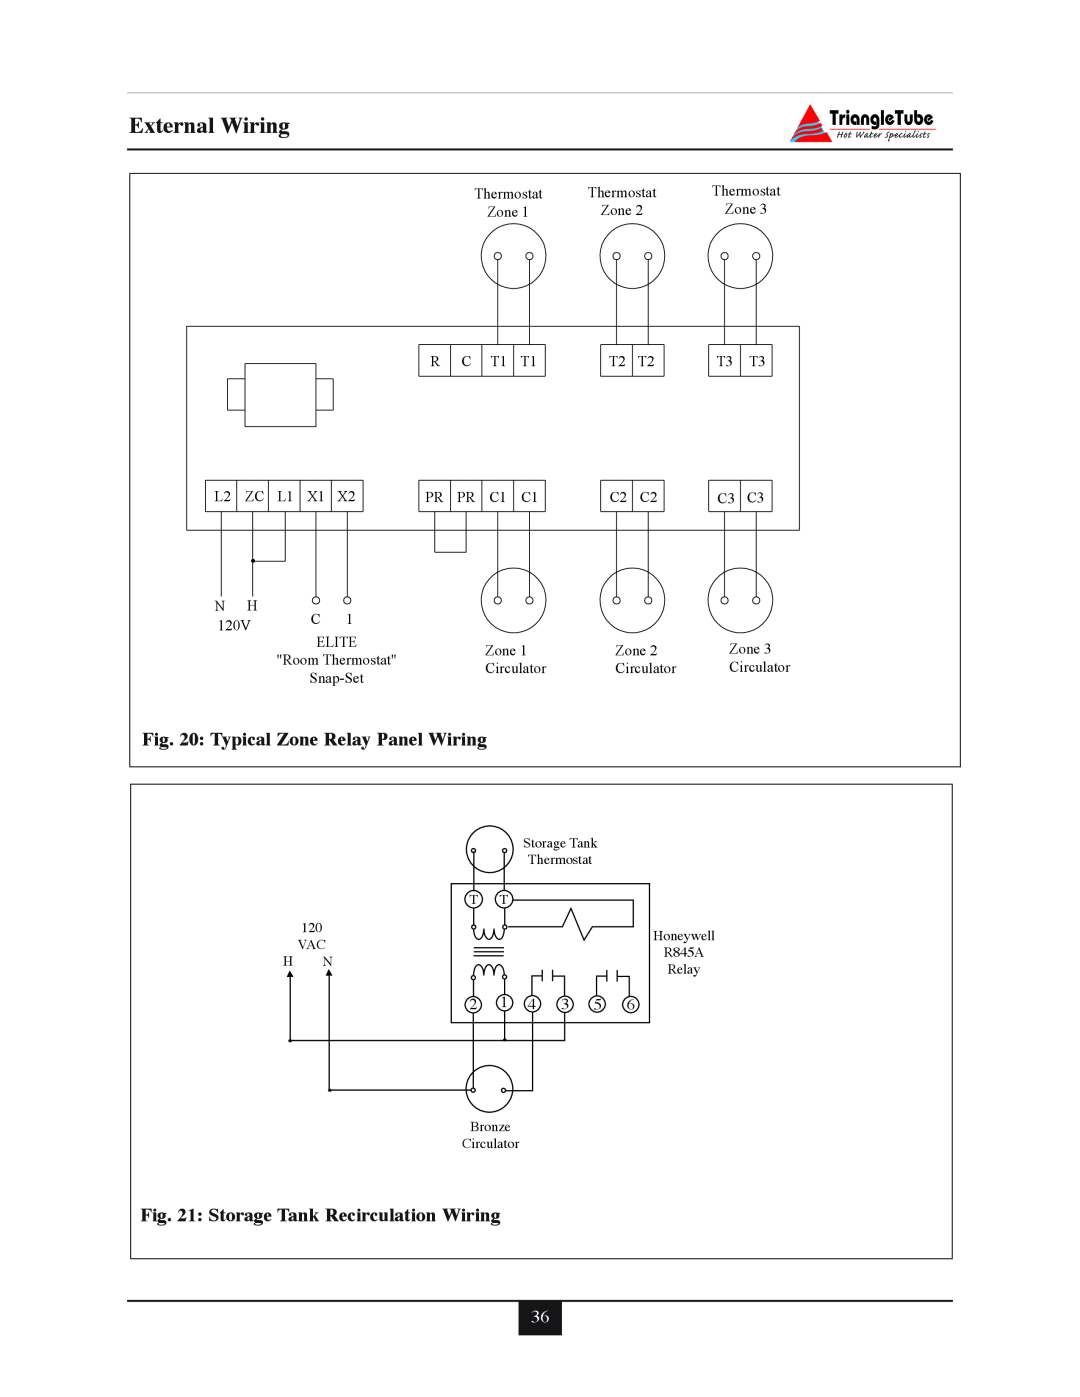 Delta 35, F-25, 30, 45, 40 warranty External Wiring, Typical Zone Relay Panel Wiring, Storage Tank Recirculation Wiring 